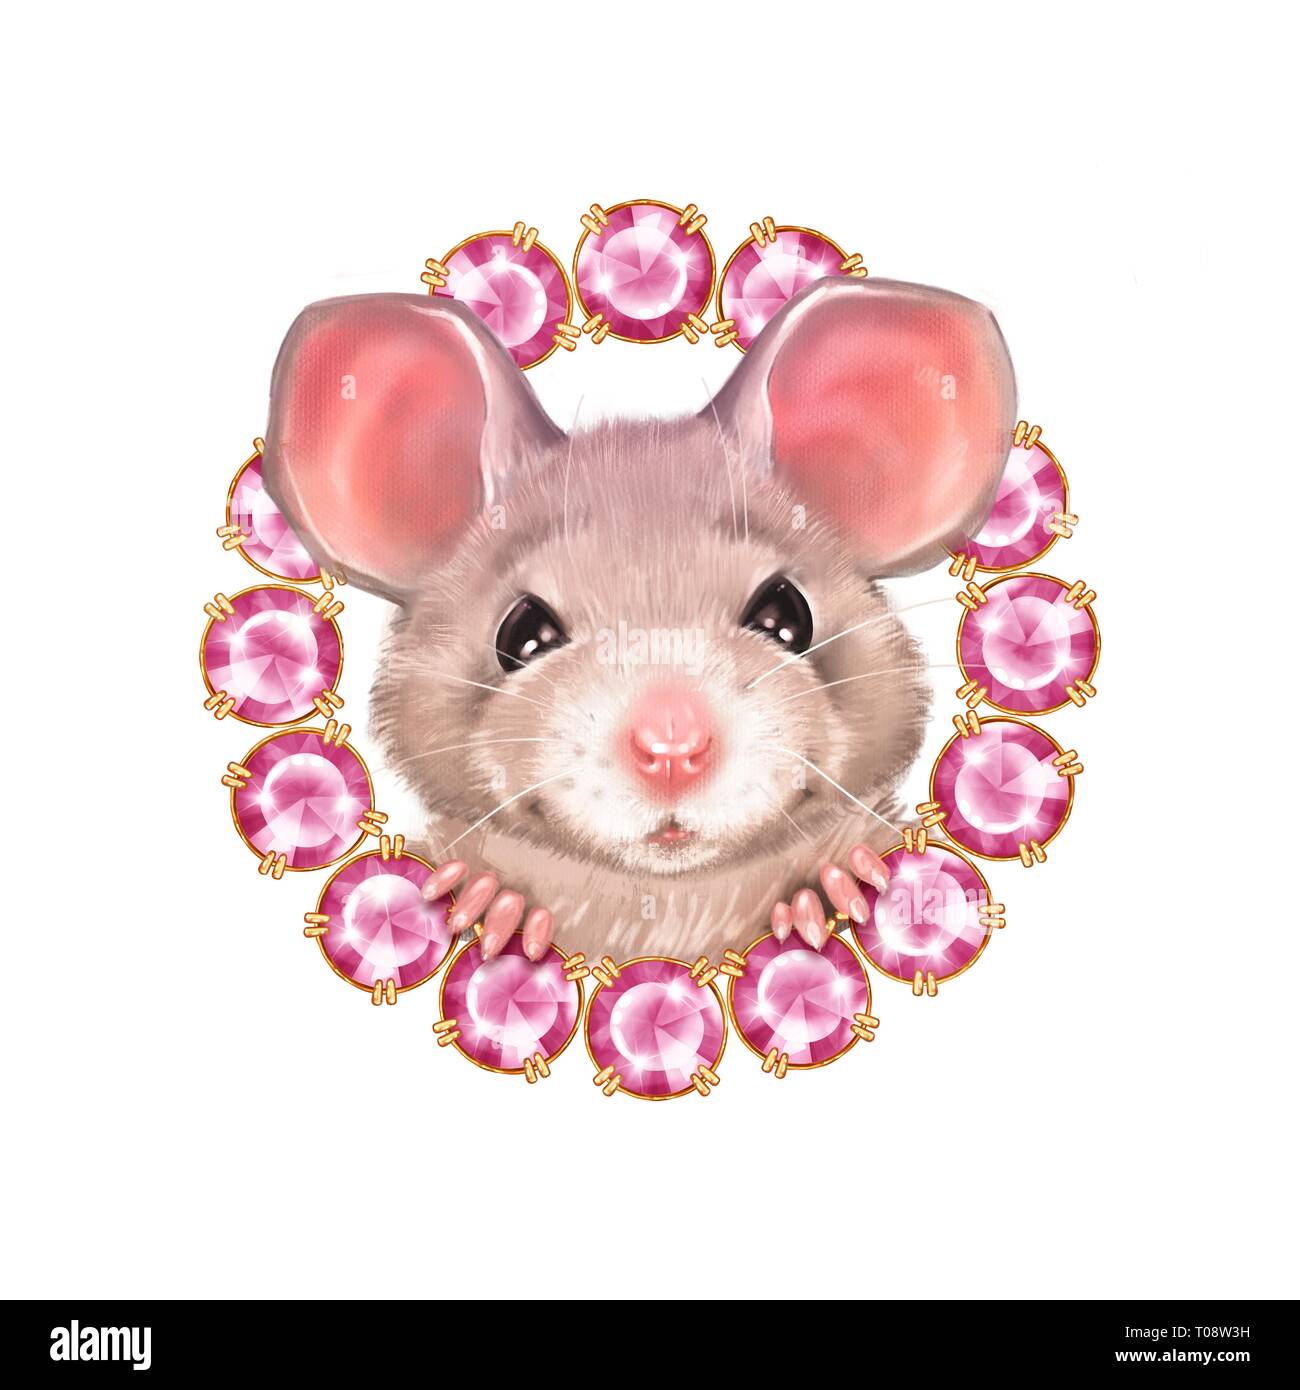 Cute cartoon rat and gems Stock Photo